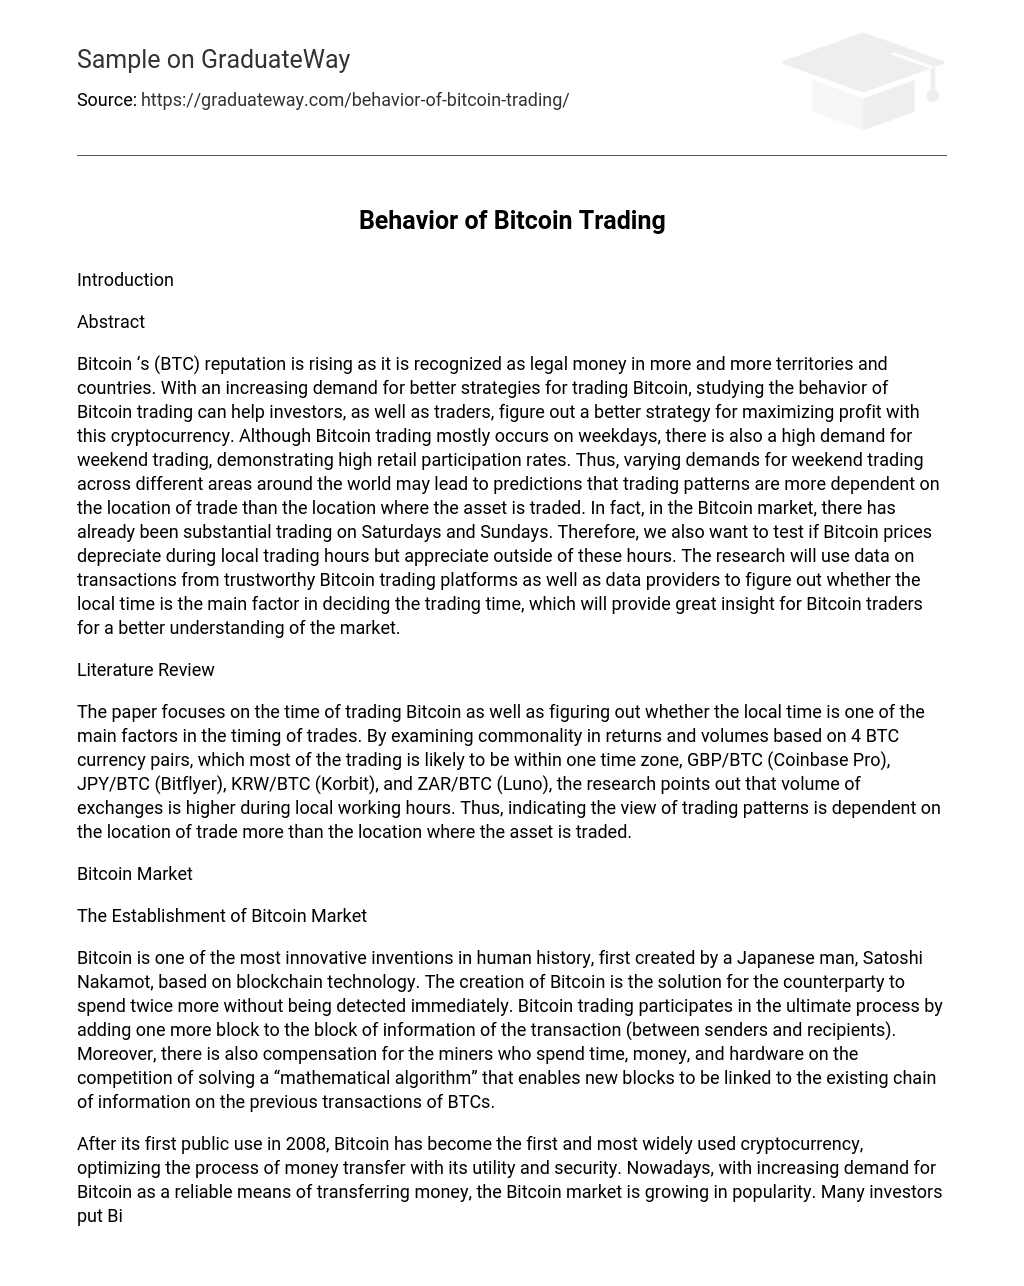 Behavior of Bitcoin Trading